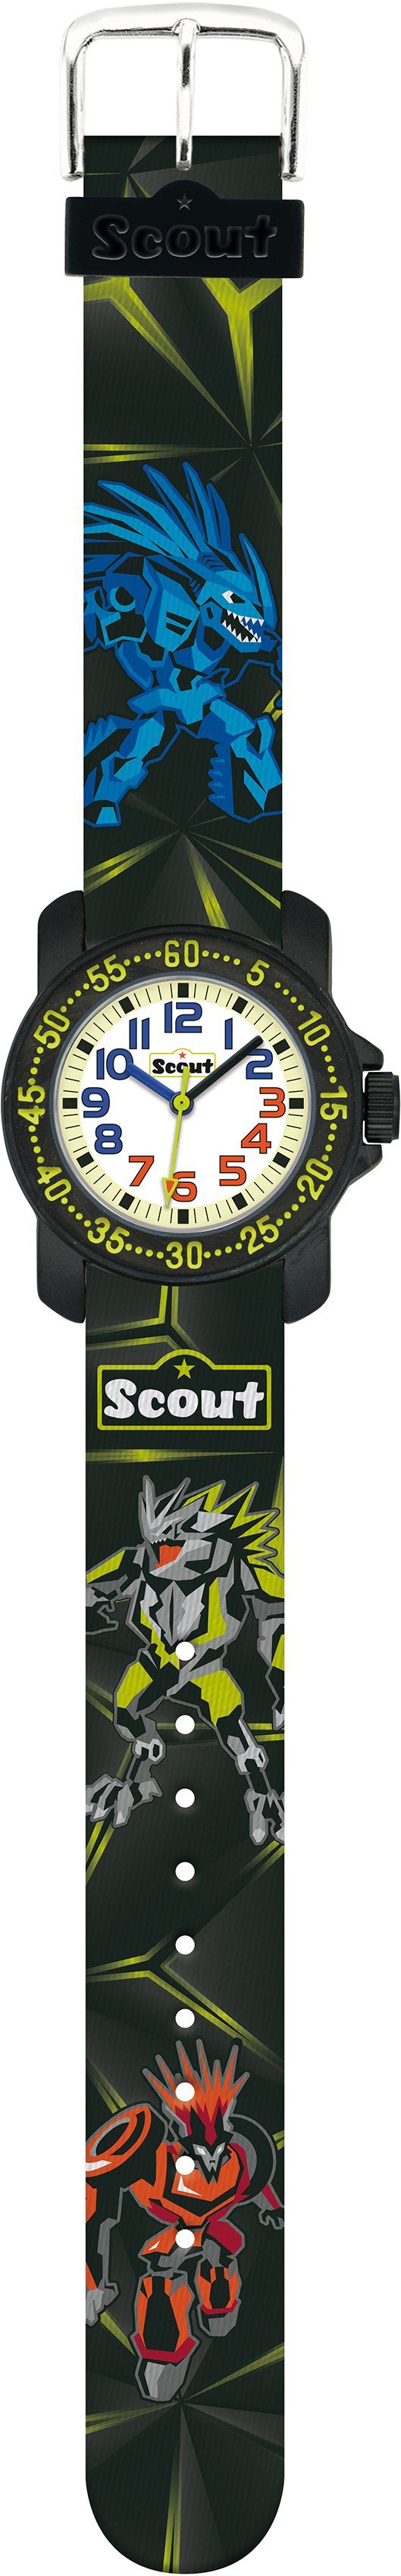 auch ideal Scout Geschenk 280376041, Boys, Action Quarzuhr als